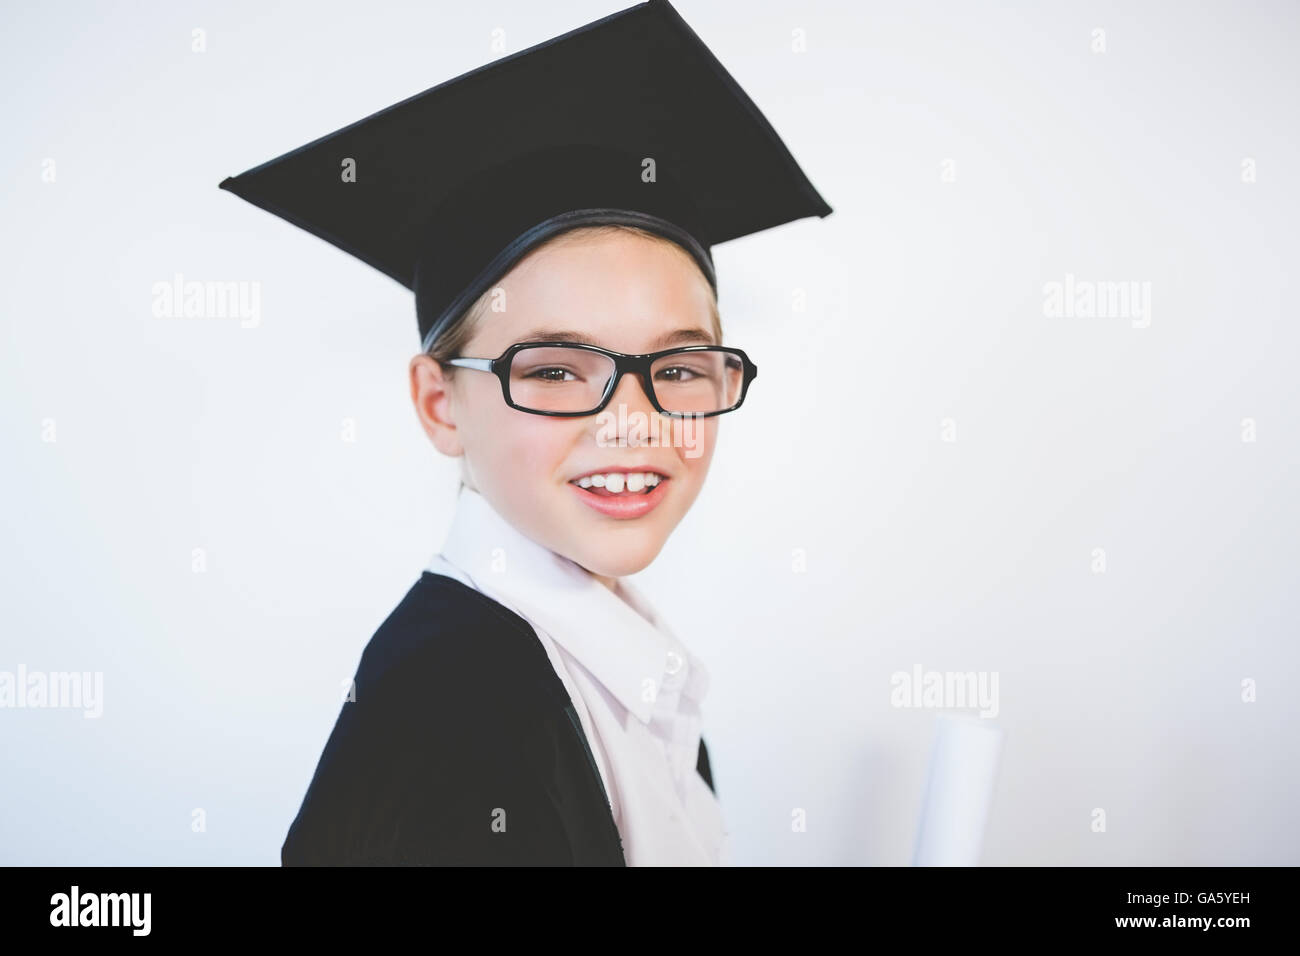 Retrato de schoolkid fingiendo ser graduado Foto de stock